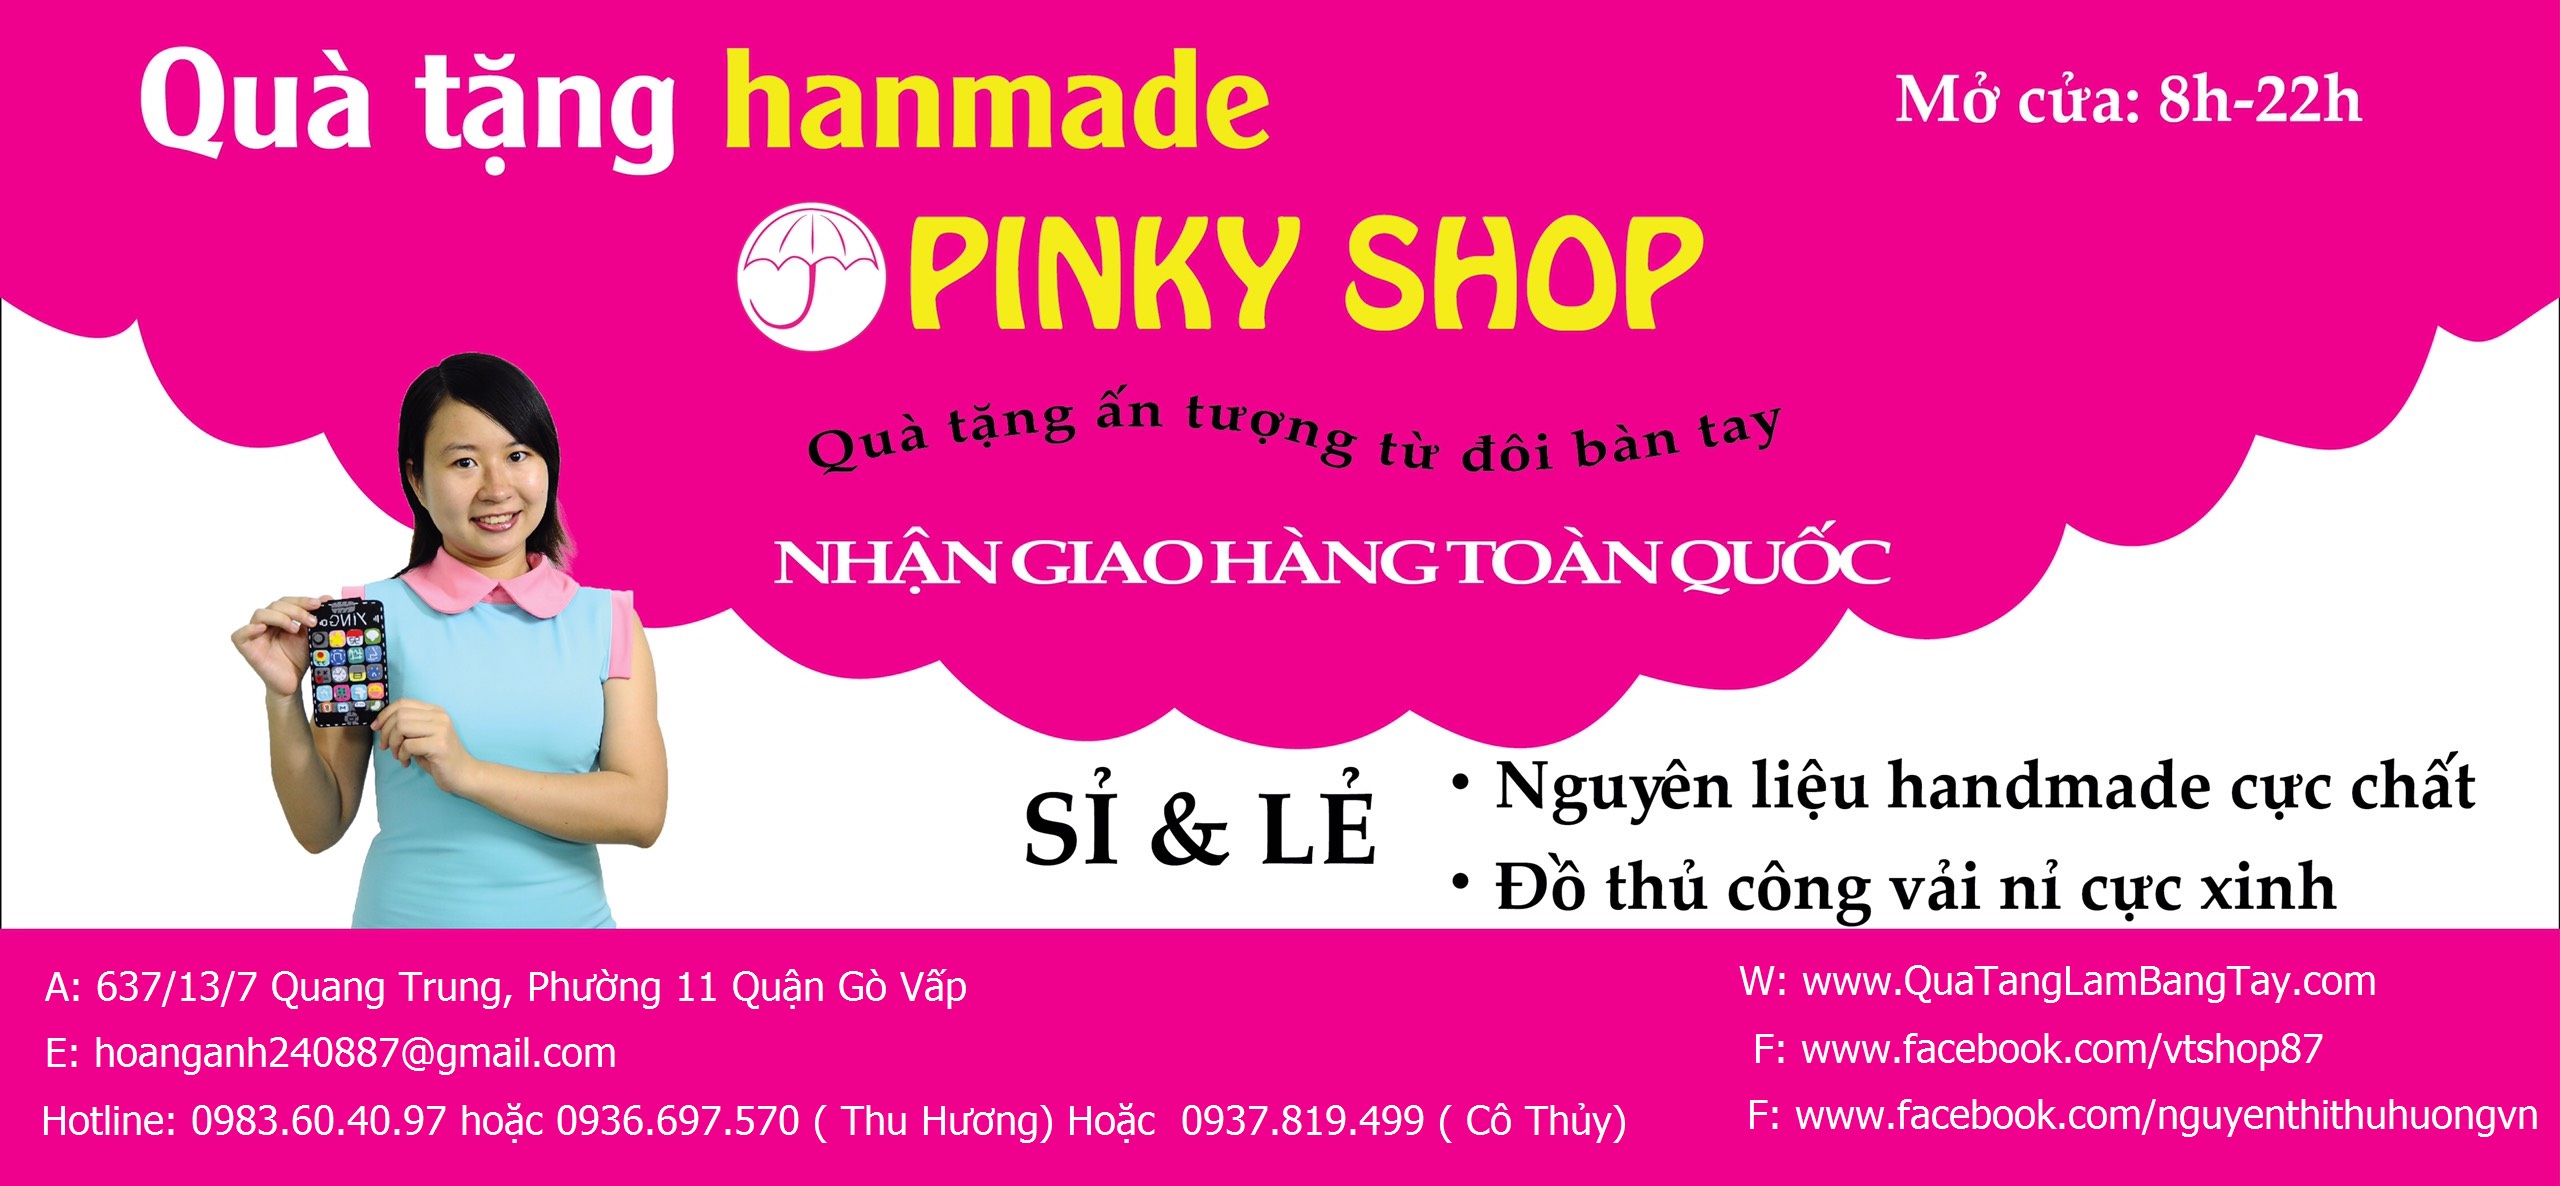 Pinky Shop